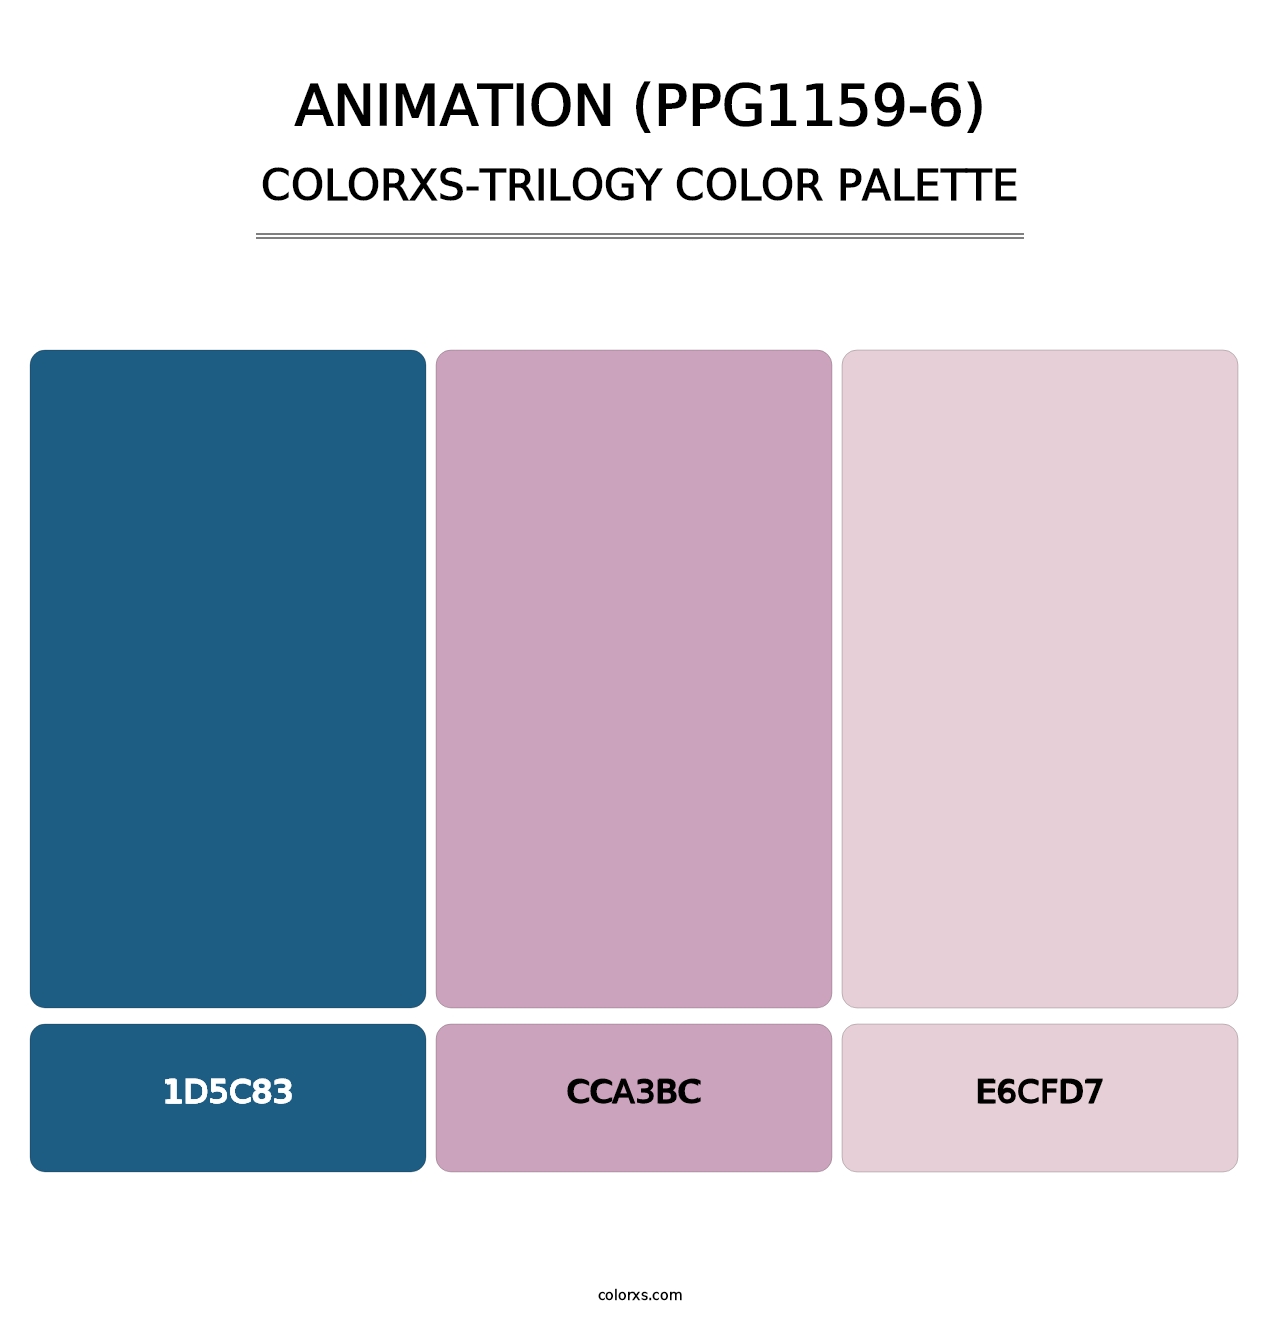 Animation (PPG1159-6) - Colorxs Trilogy Palette